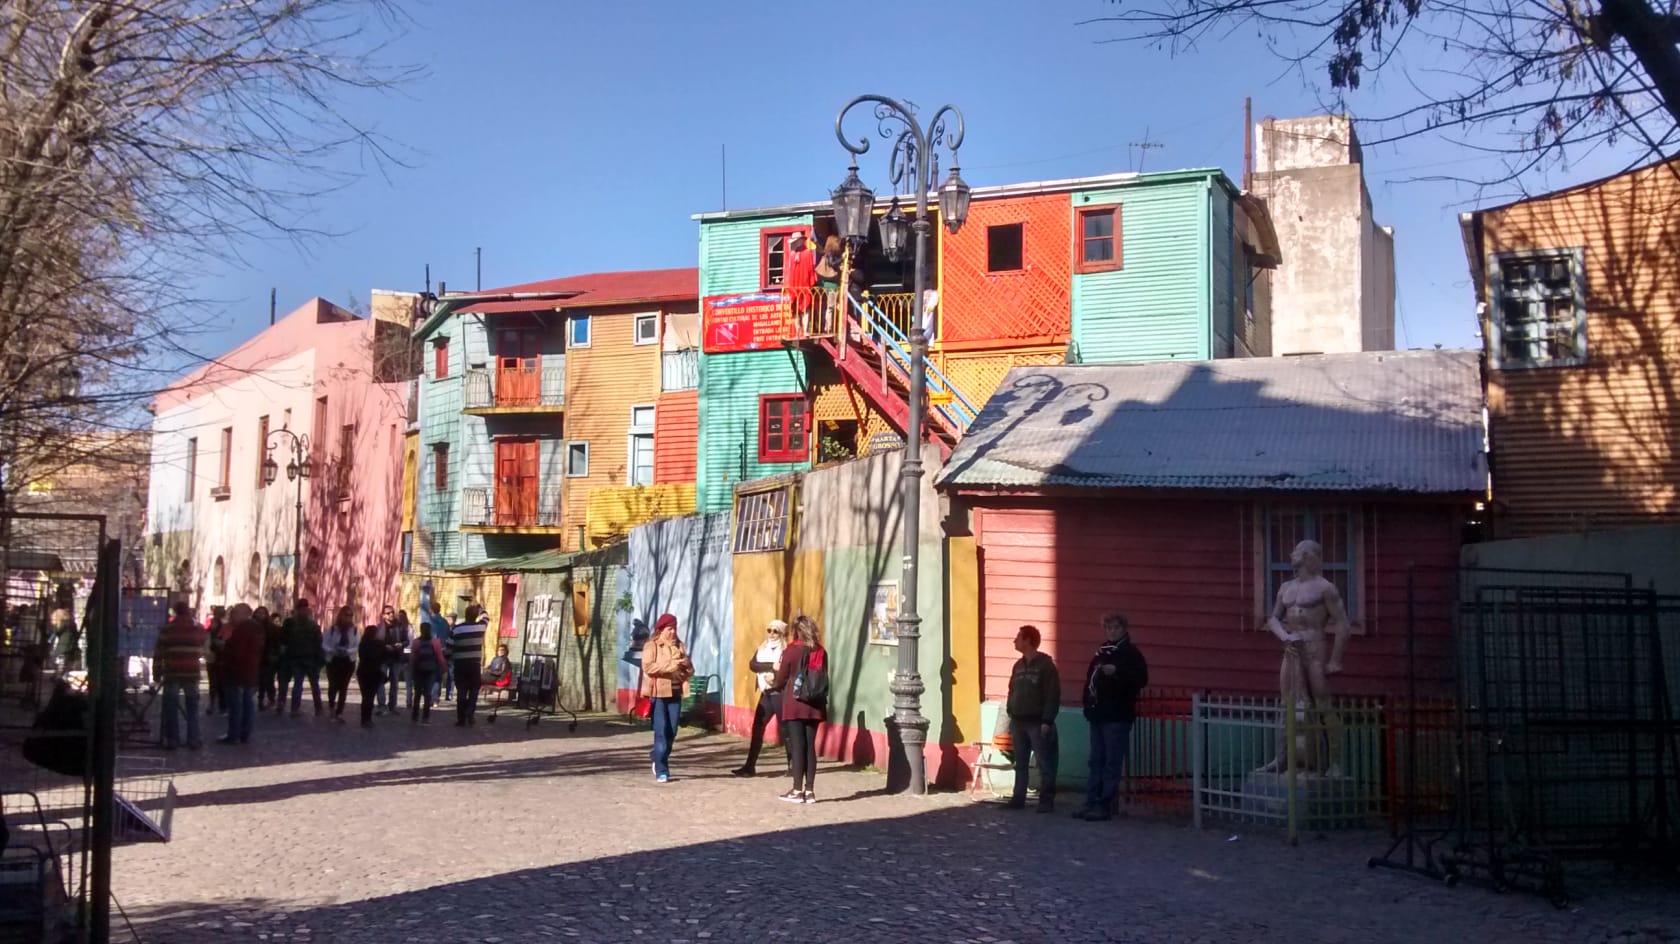 Colorful buildings in La Boca, Argentina.